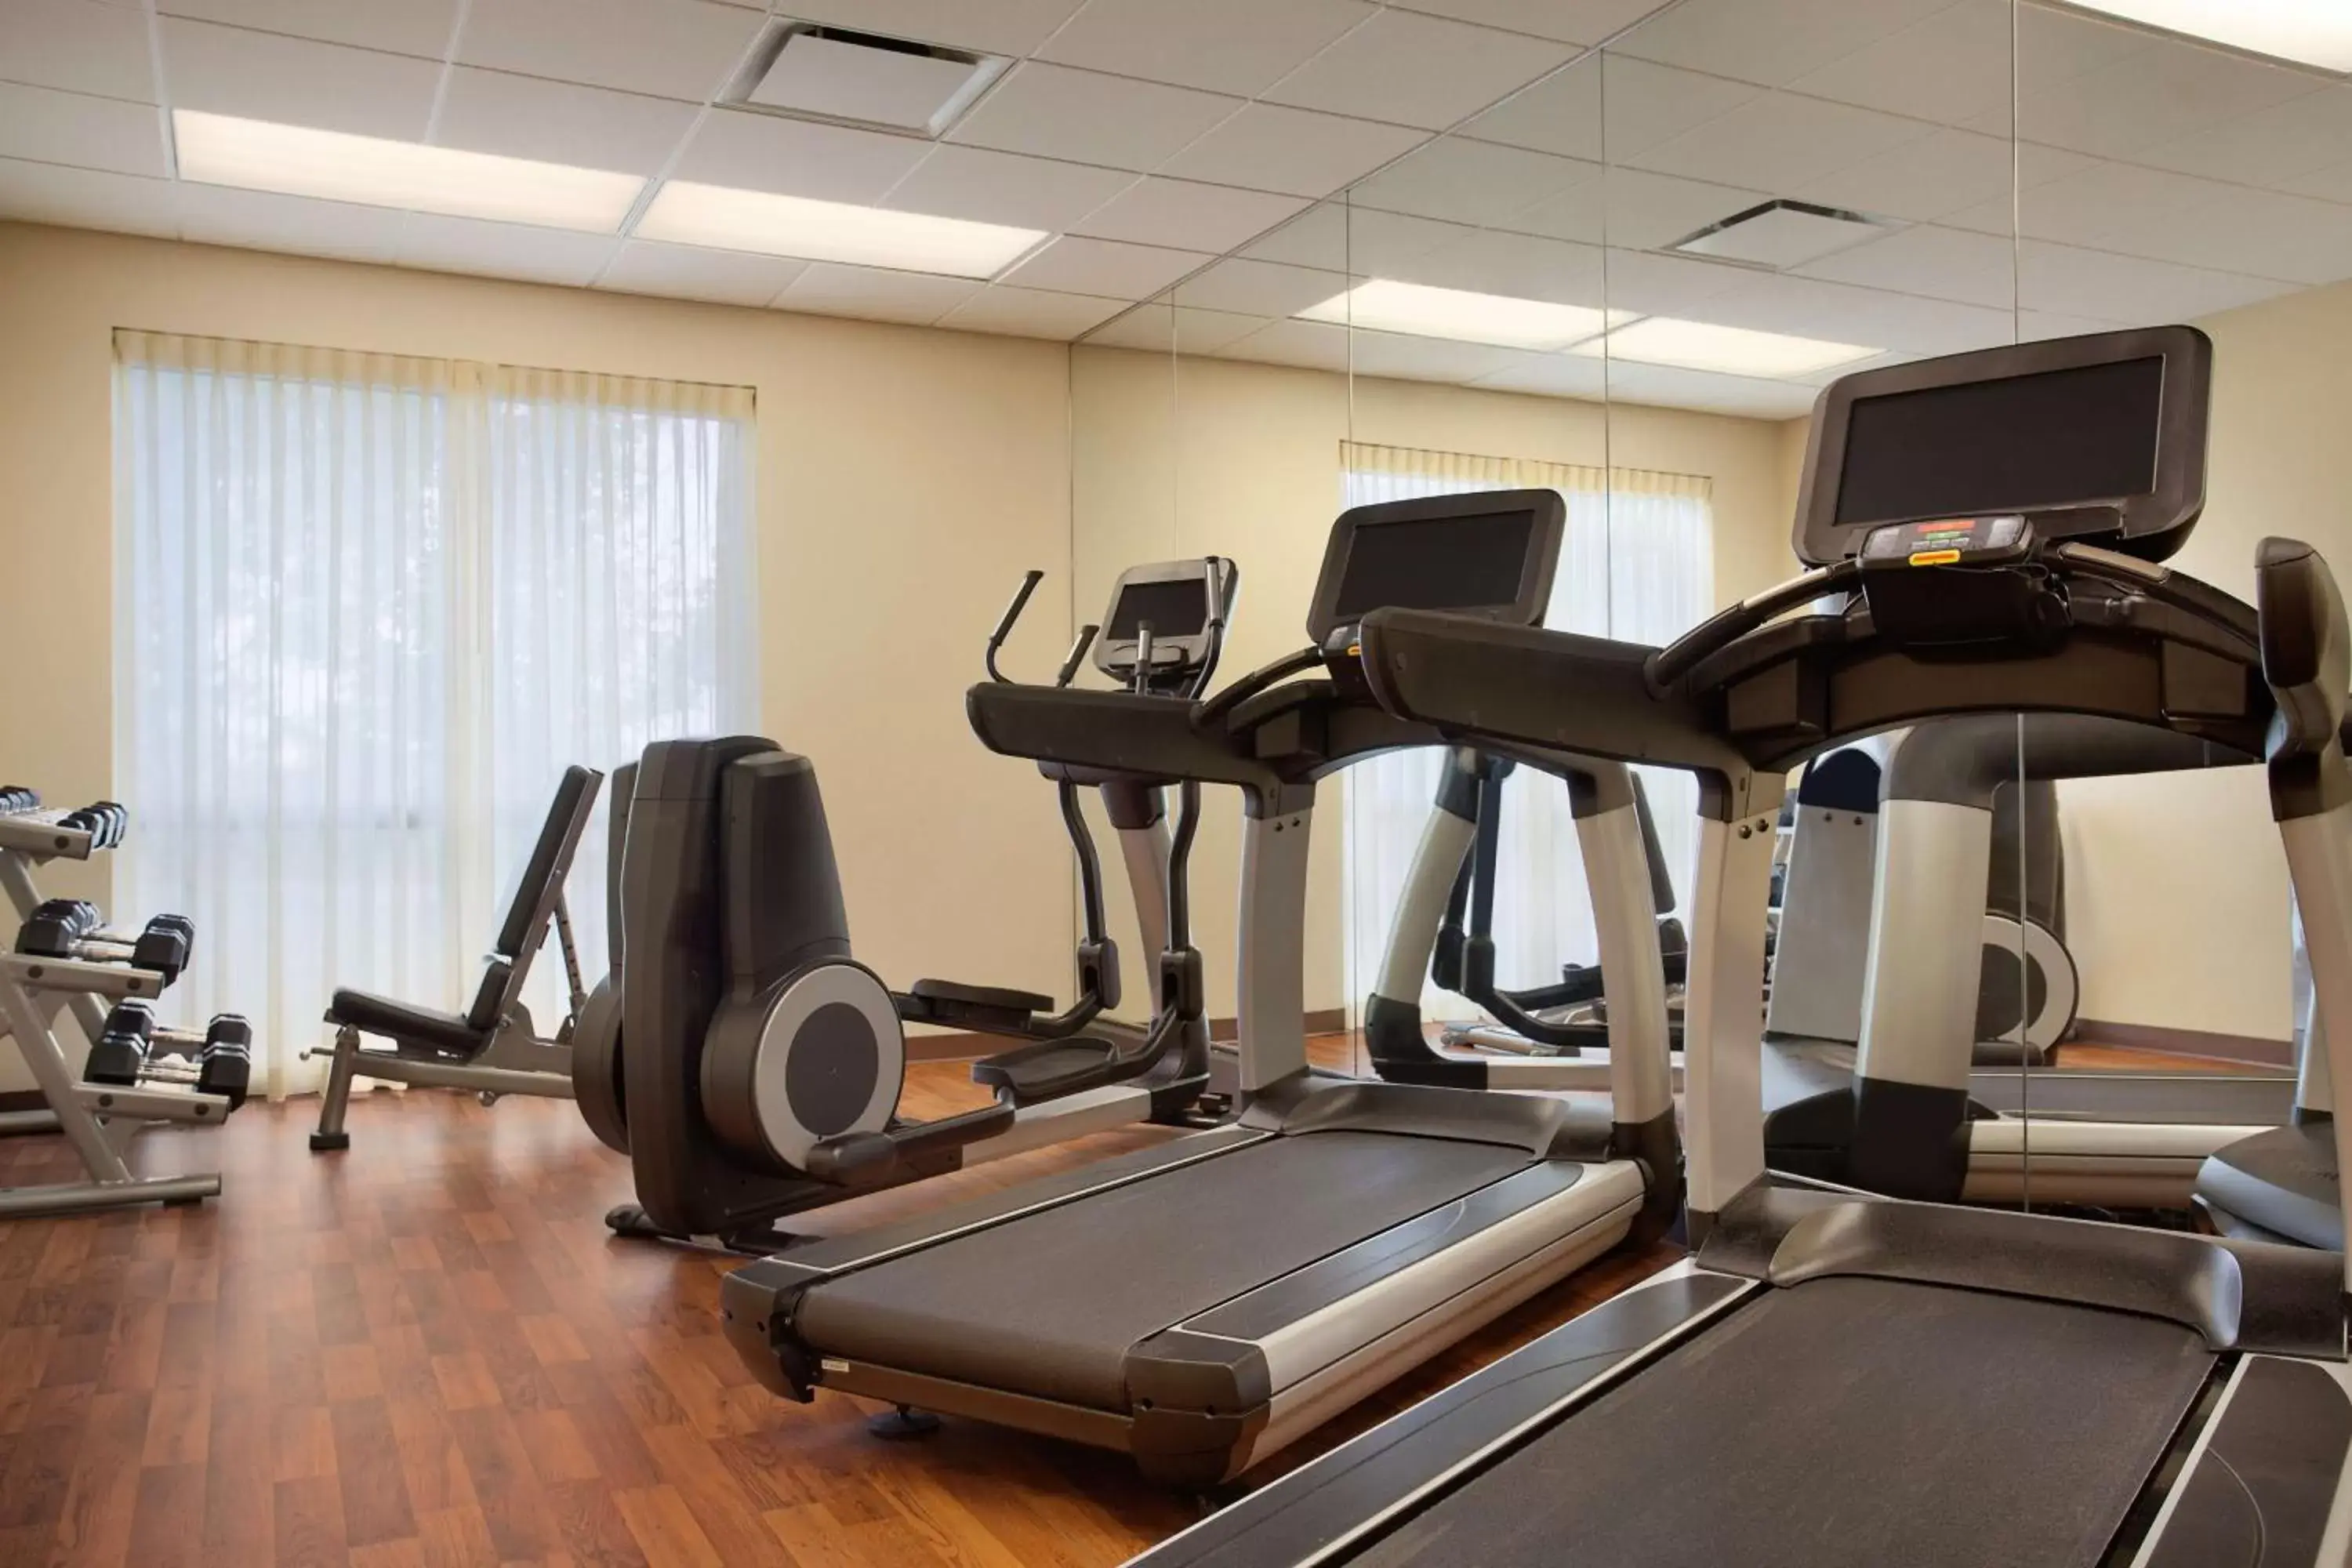 Fitness centre/facilities, Fitness Center/Facilities in Hyatt Place Denver-South/Park Meadows